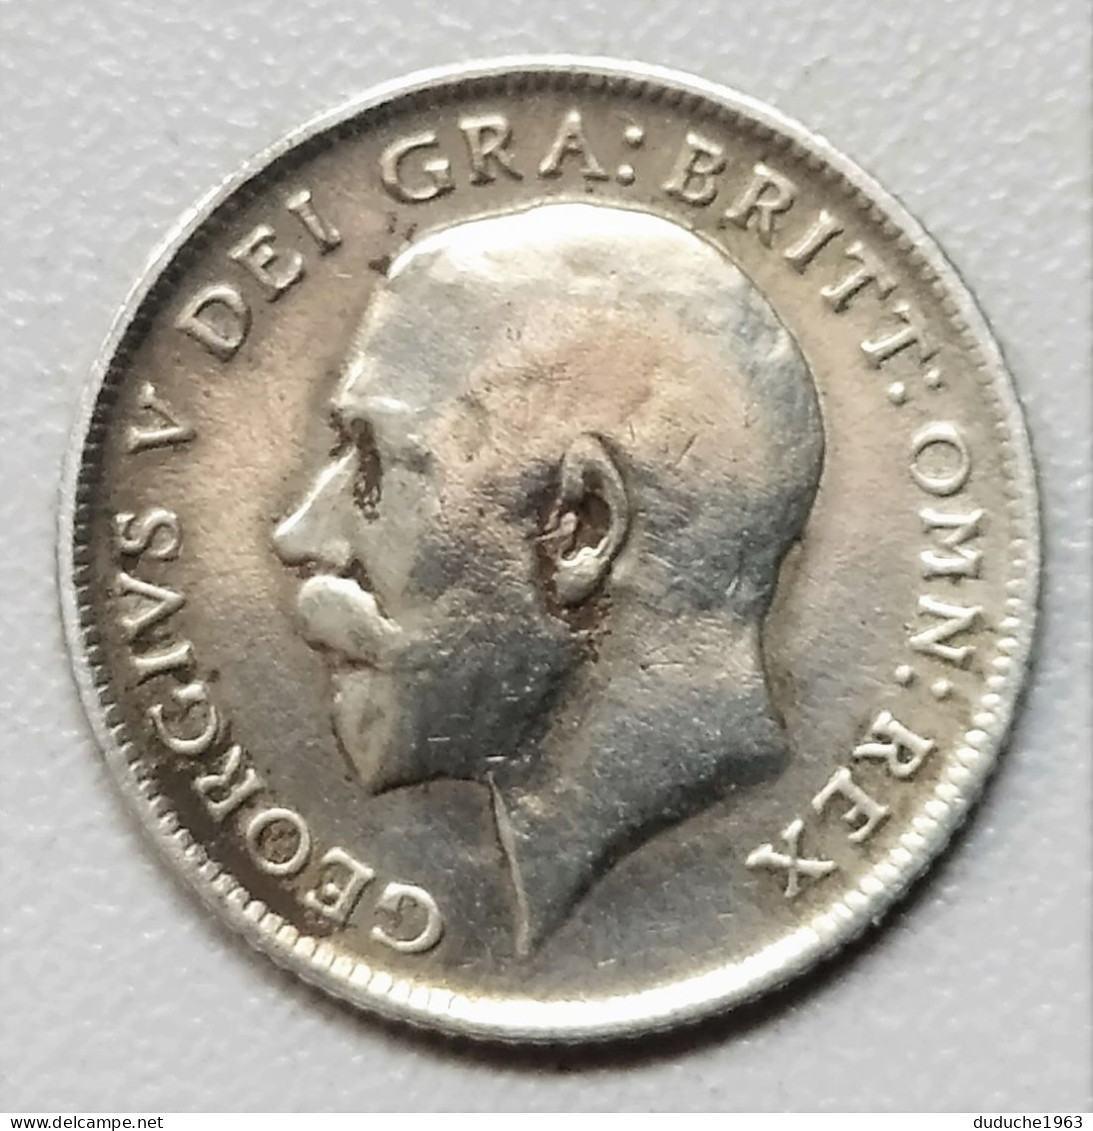 Grande Bretagne - 6 Pence Argent 1914 - H. 6 Pence